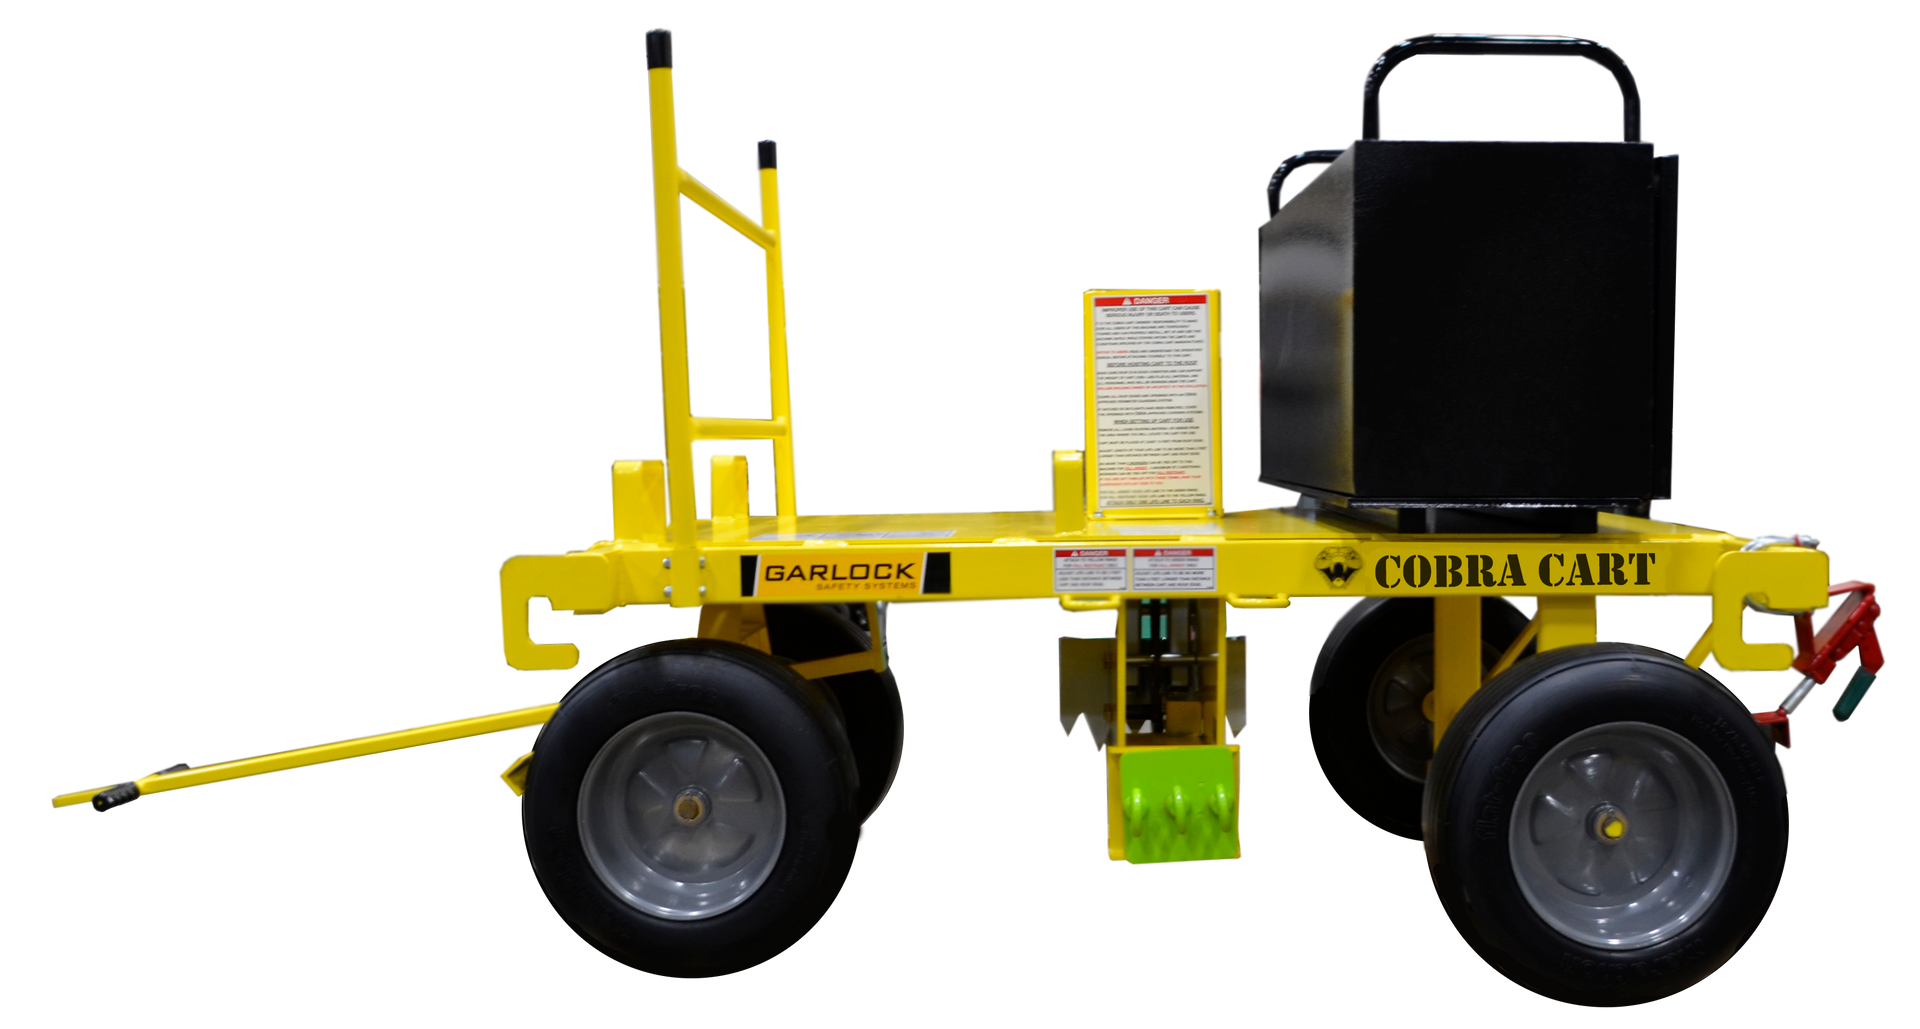 cobra cart safety equipment